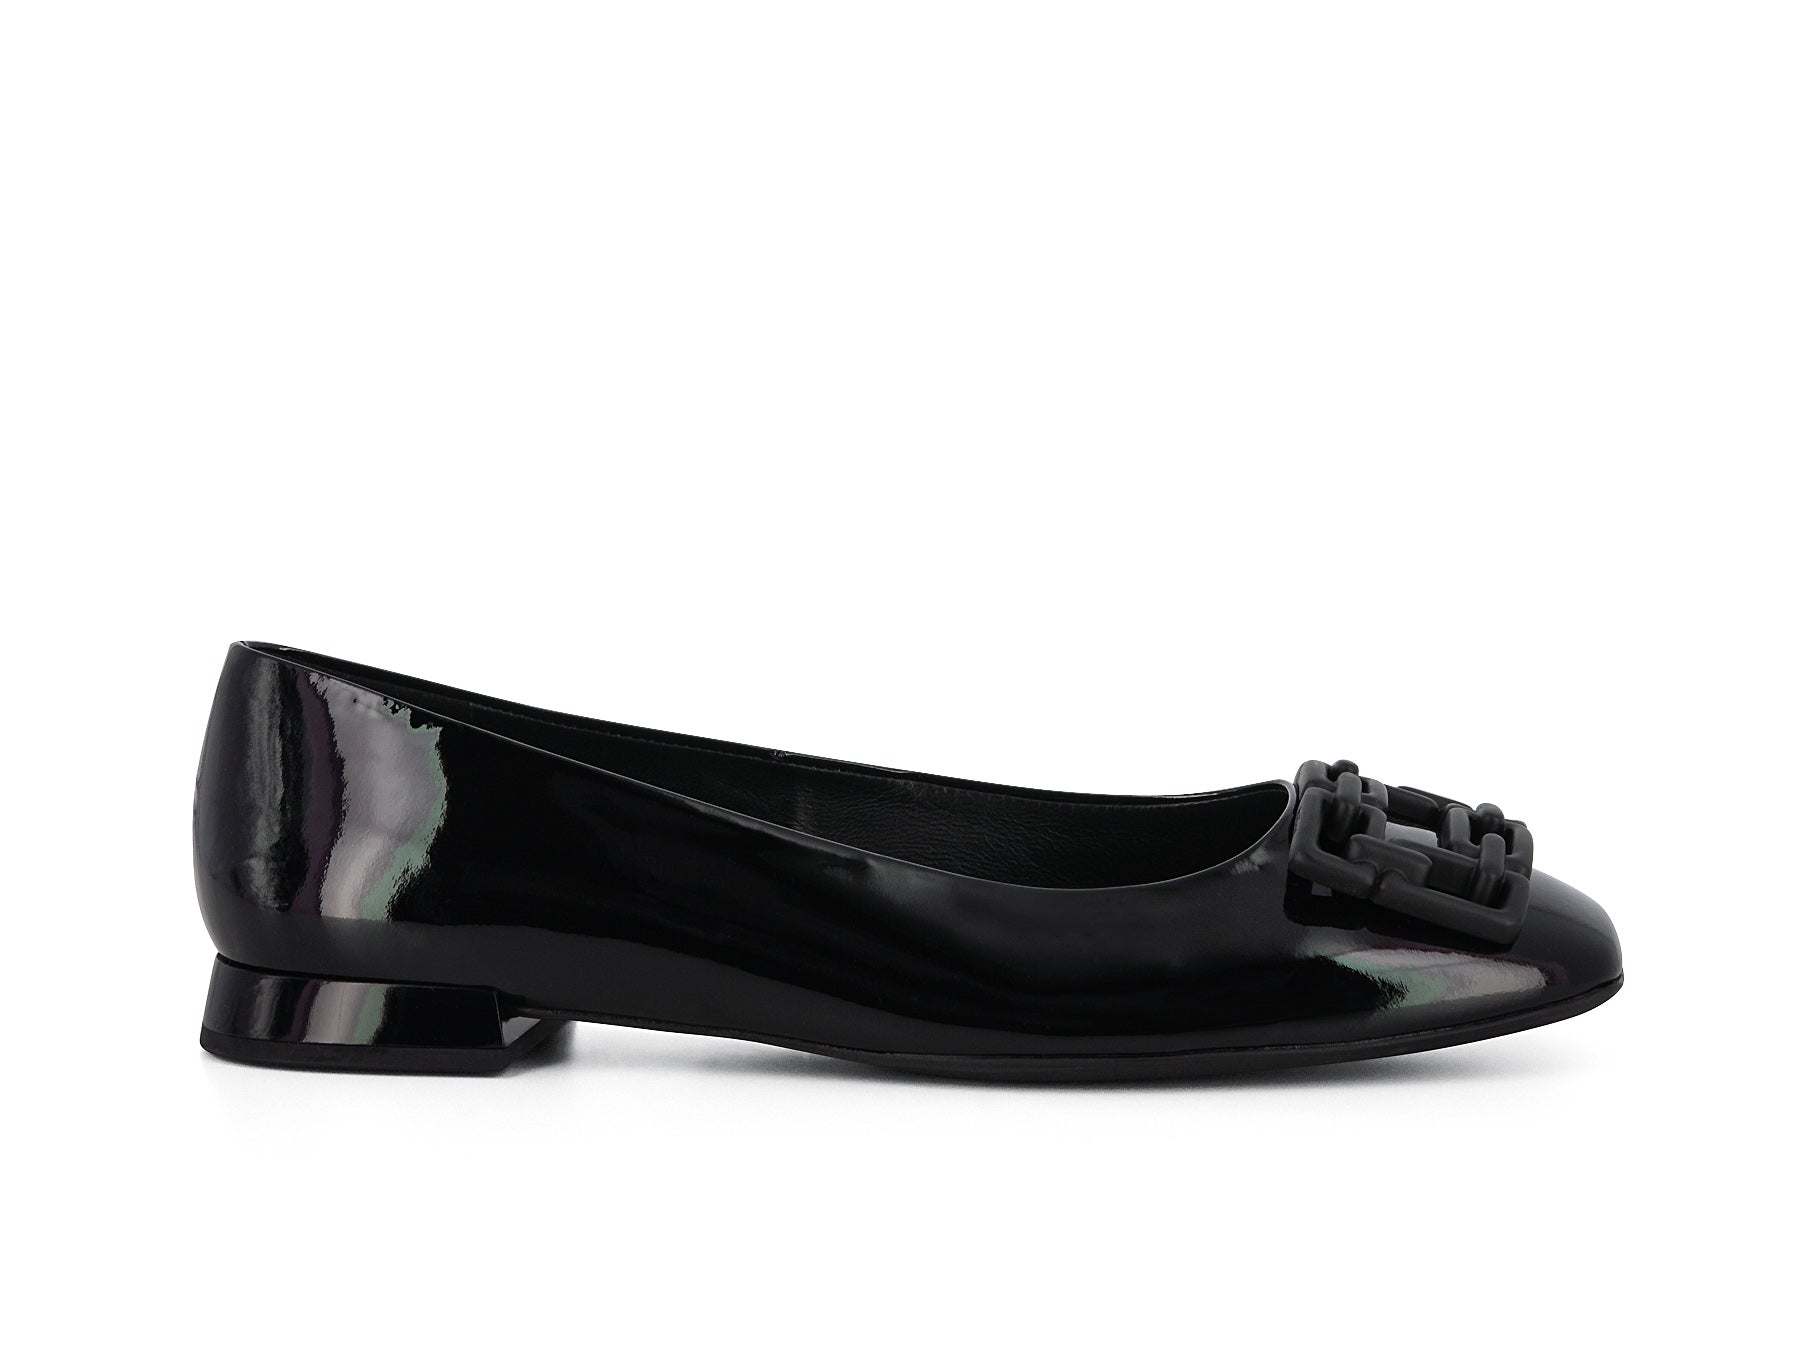 TRIXIA BLACK | Peter Sheppard Footwear